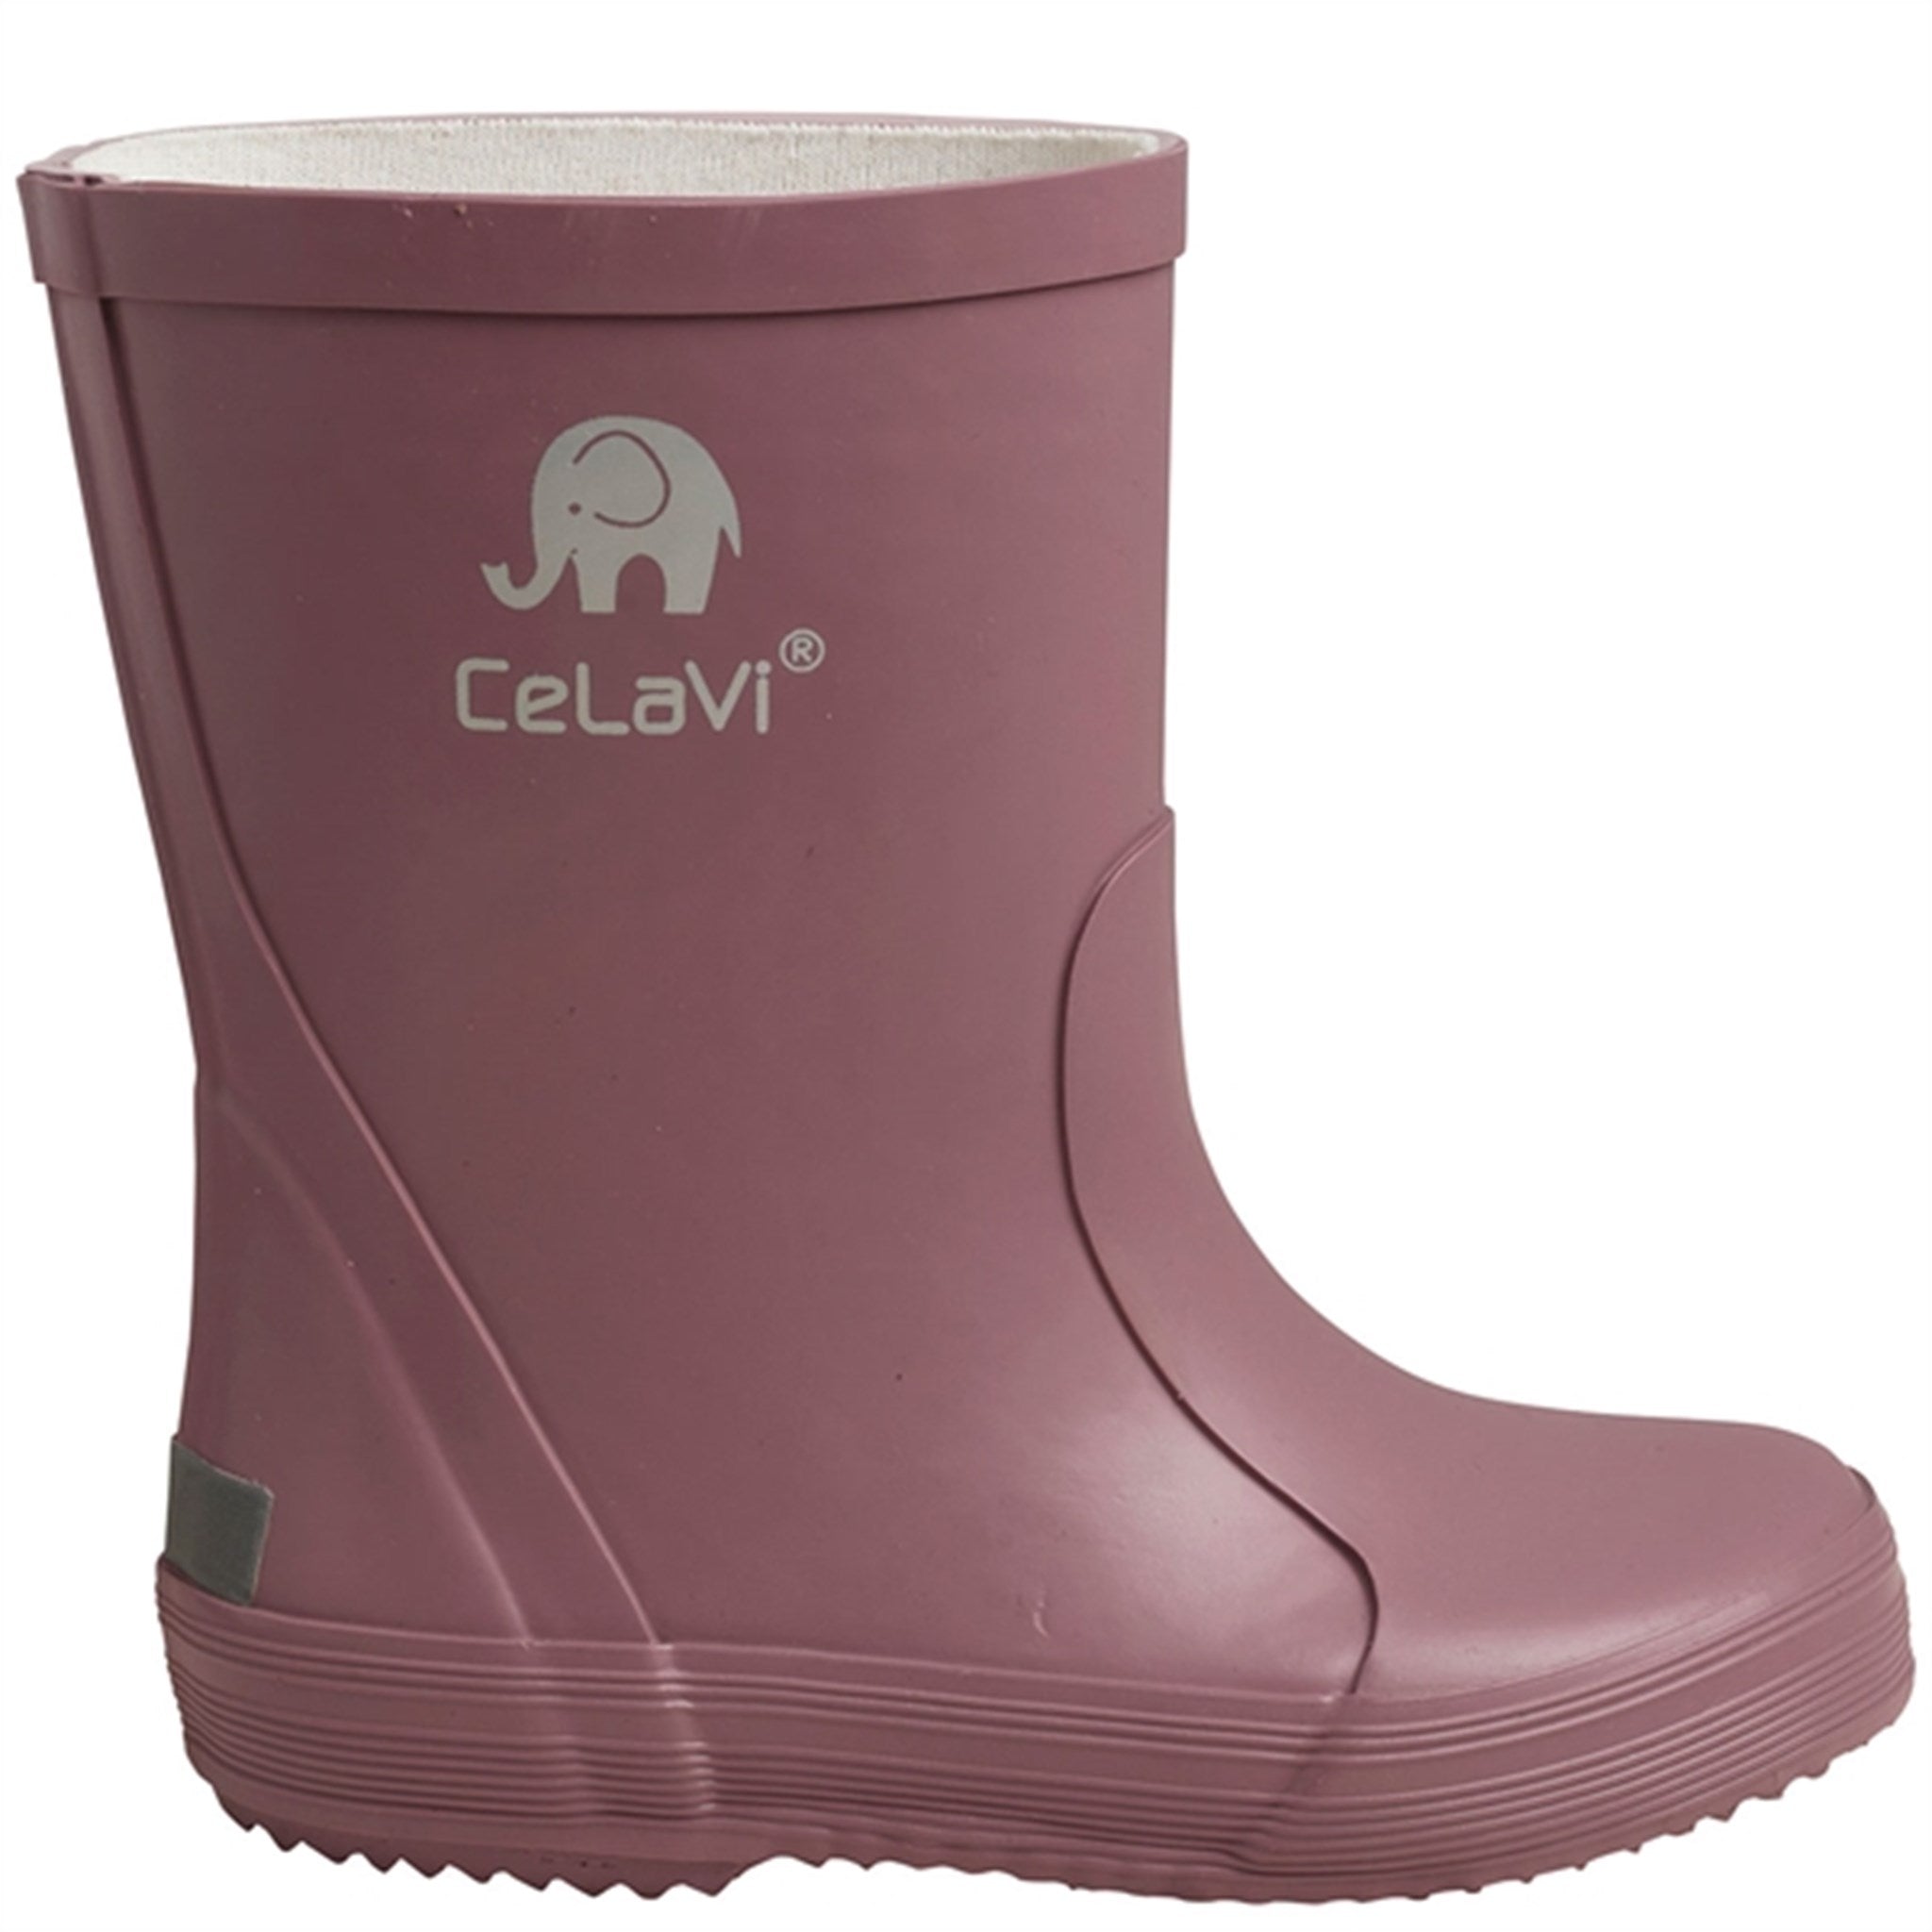 CeLaVi Basic Wellies Boot Rose Brown